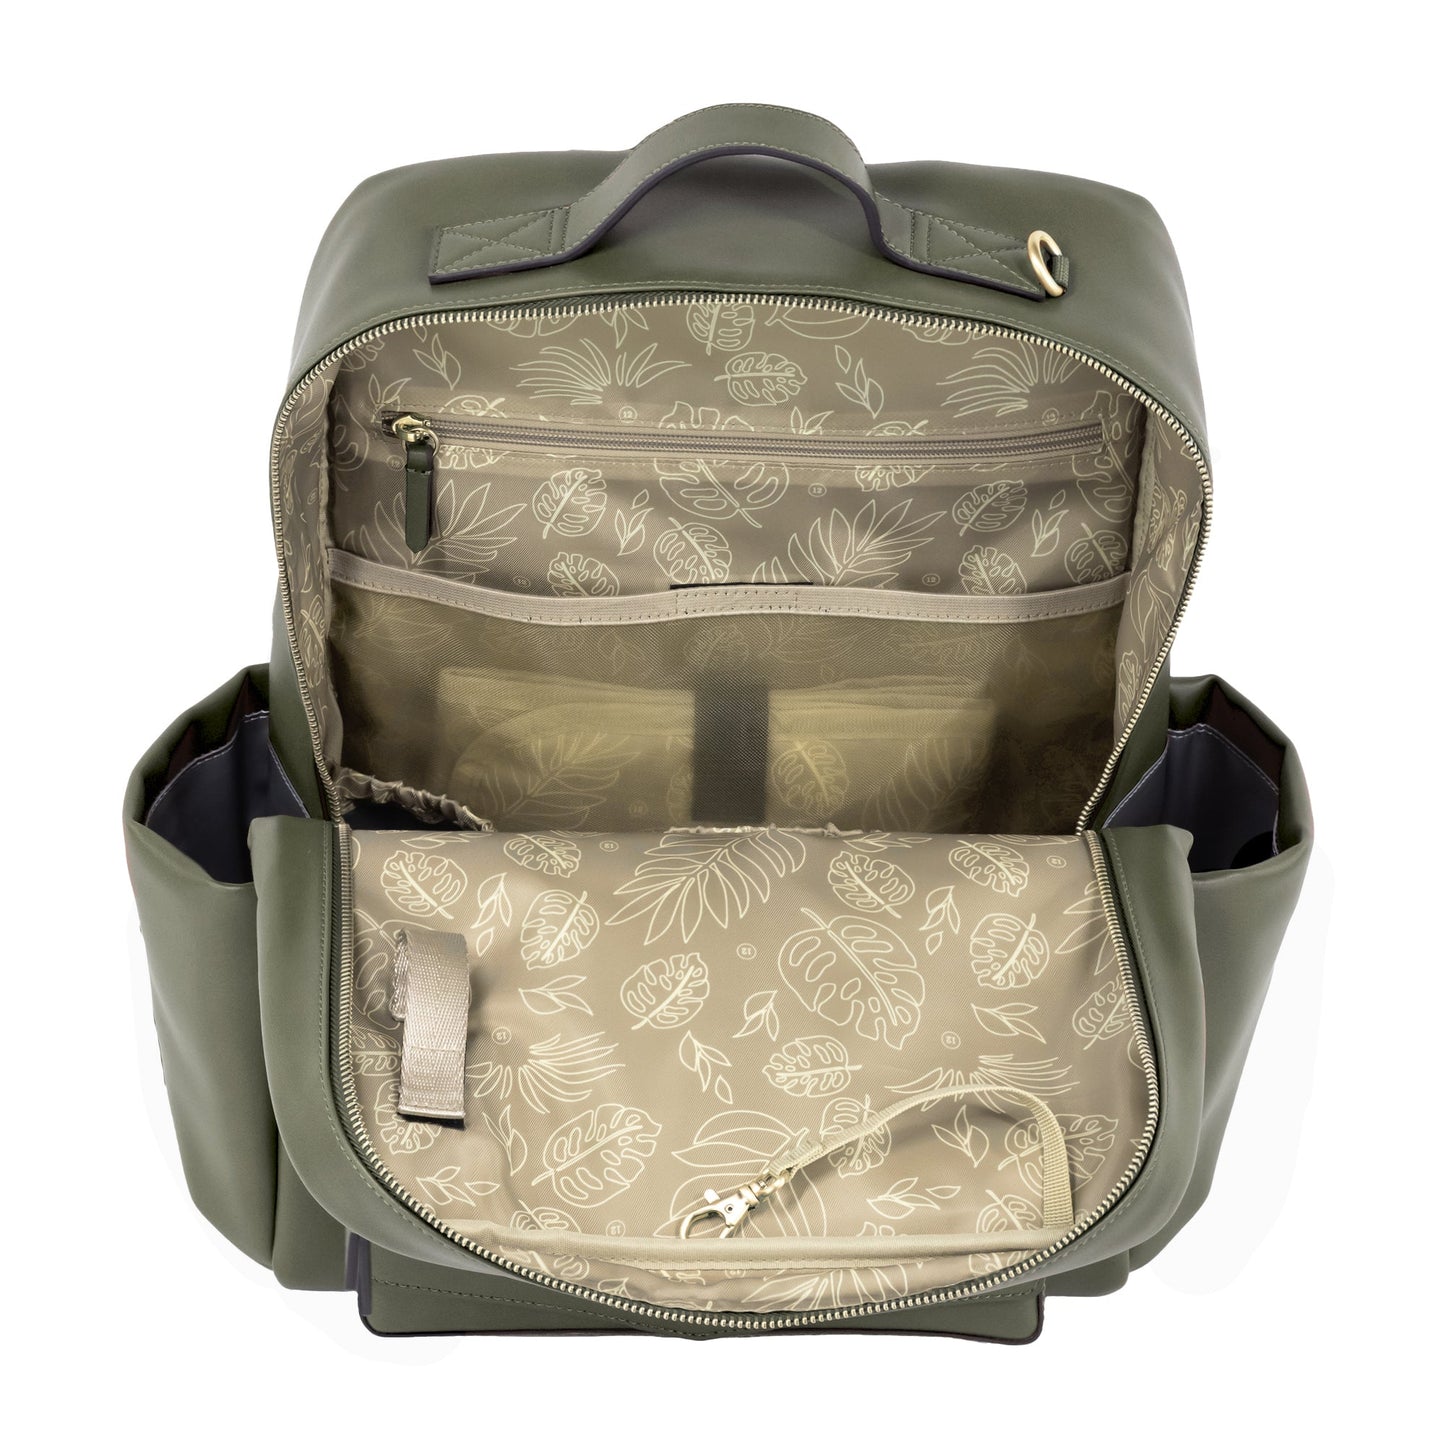 PEEK A BOO backpack תיק גב |ירוק| תיק גב